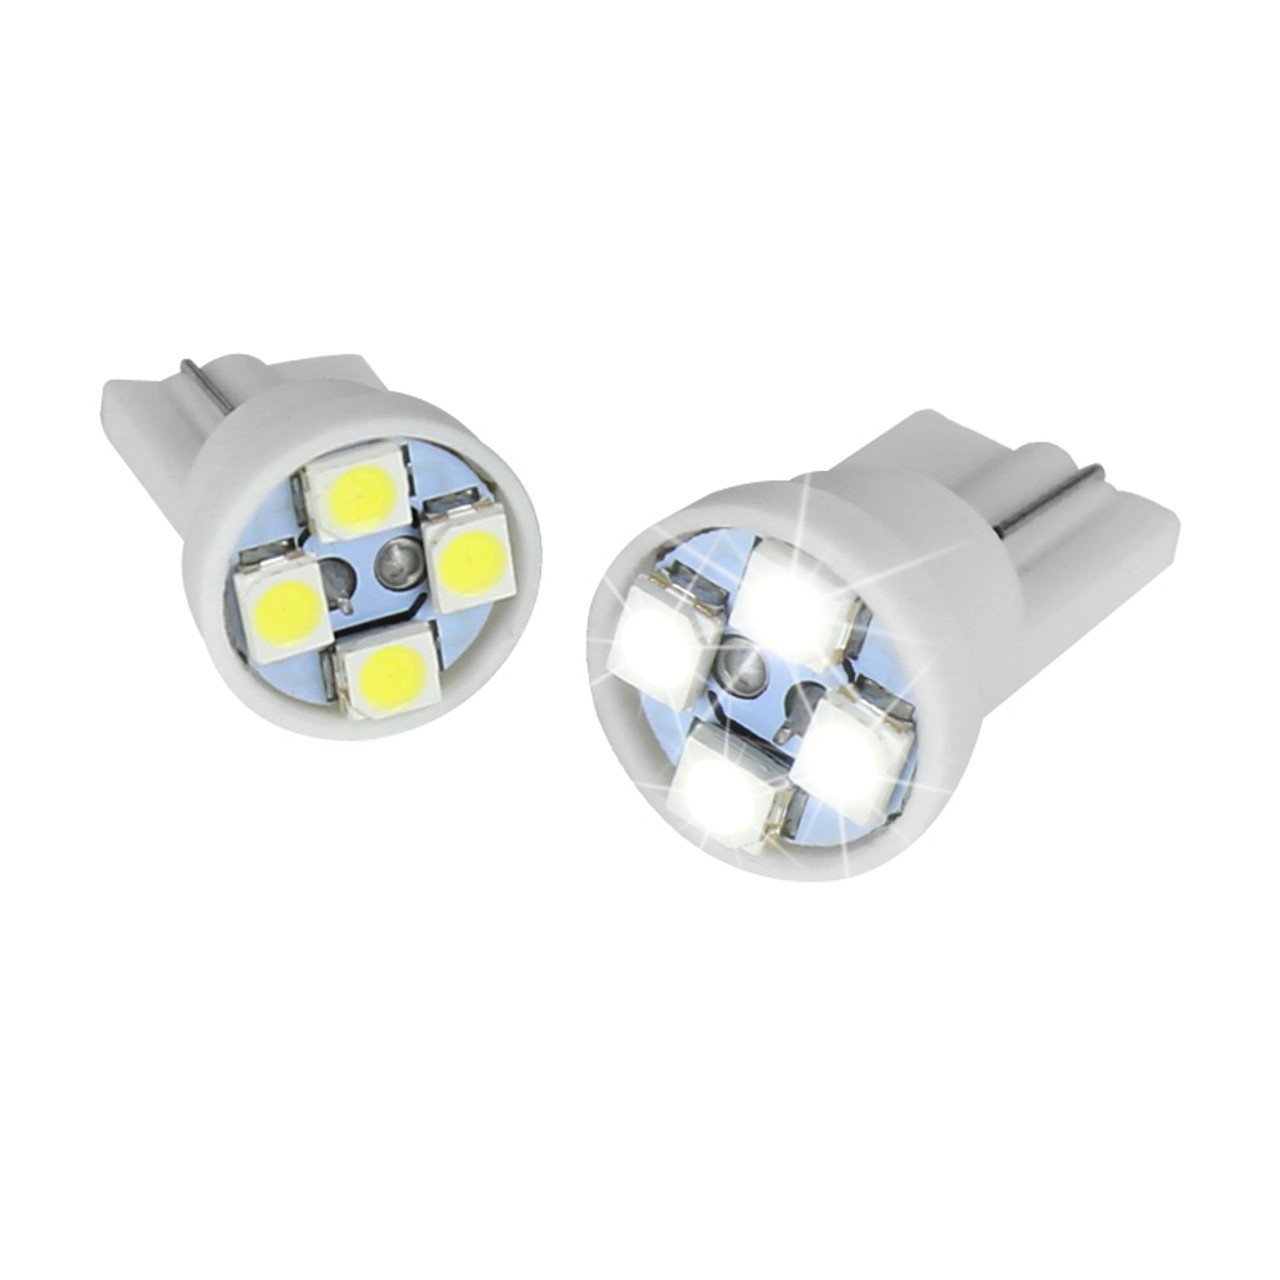 2pc White Super Bright 4 SMD LED Wedge Light Bulbs 194 T10 168